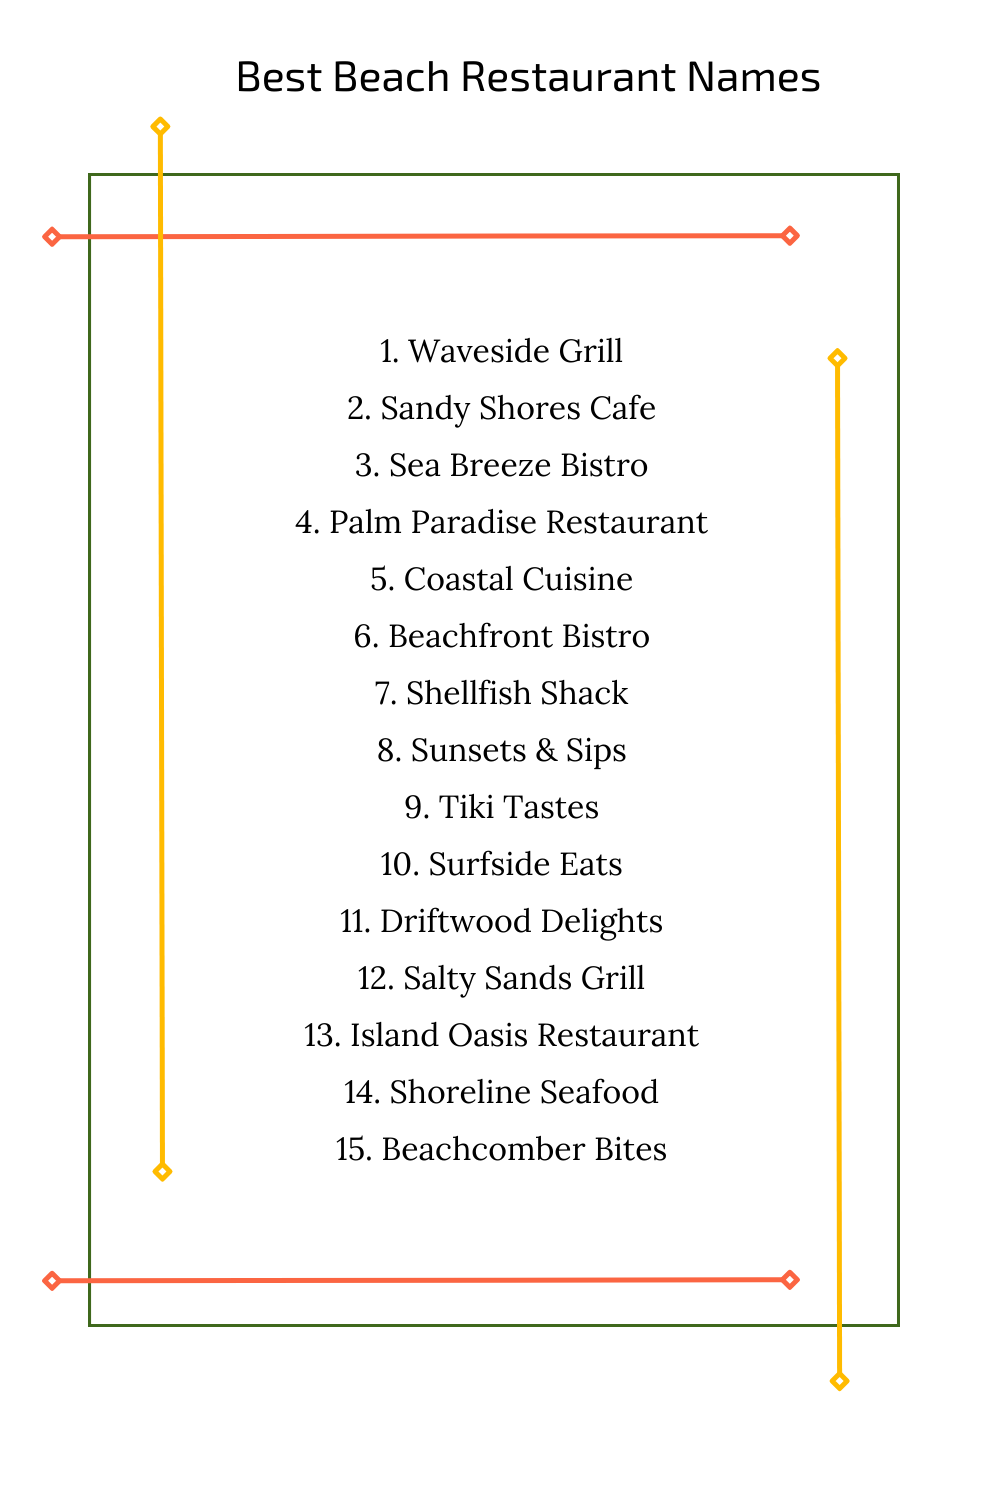 Best Beach Restaurant Names